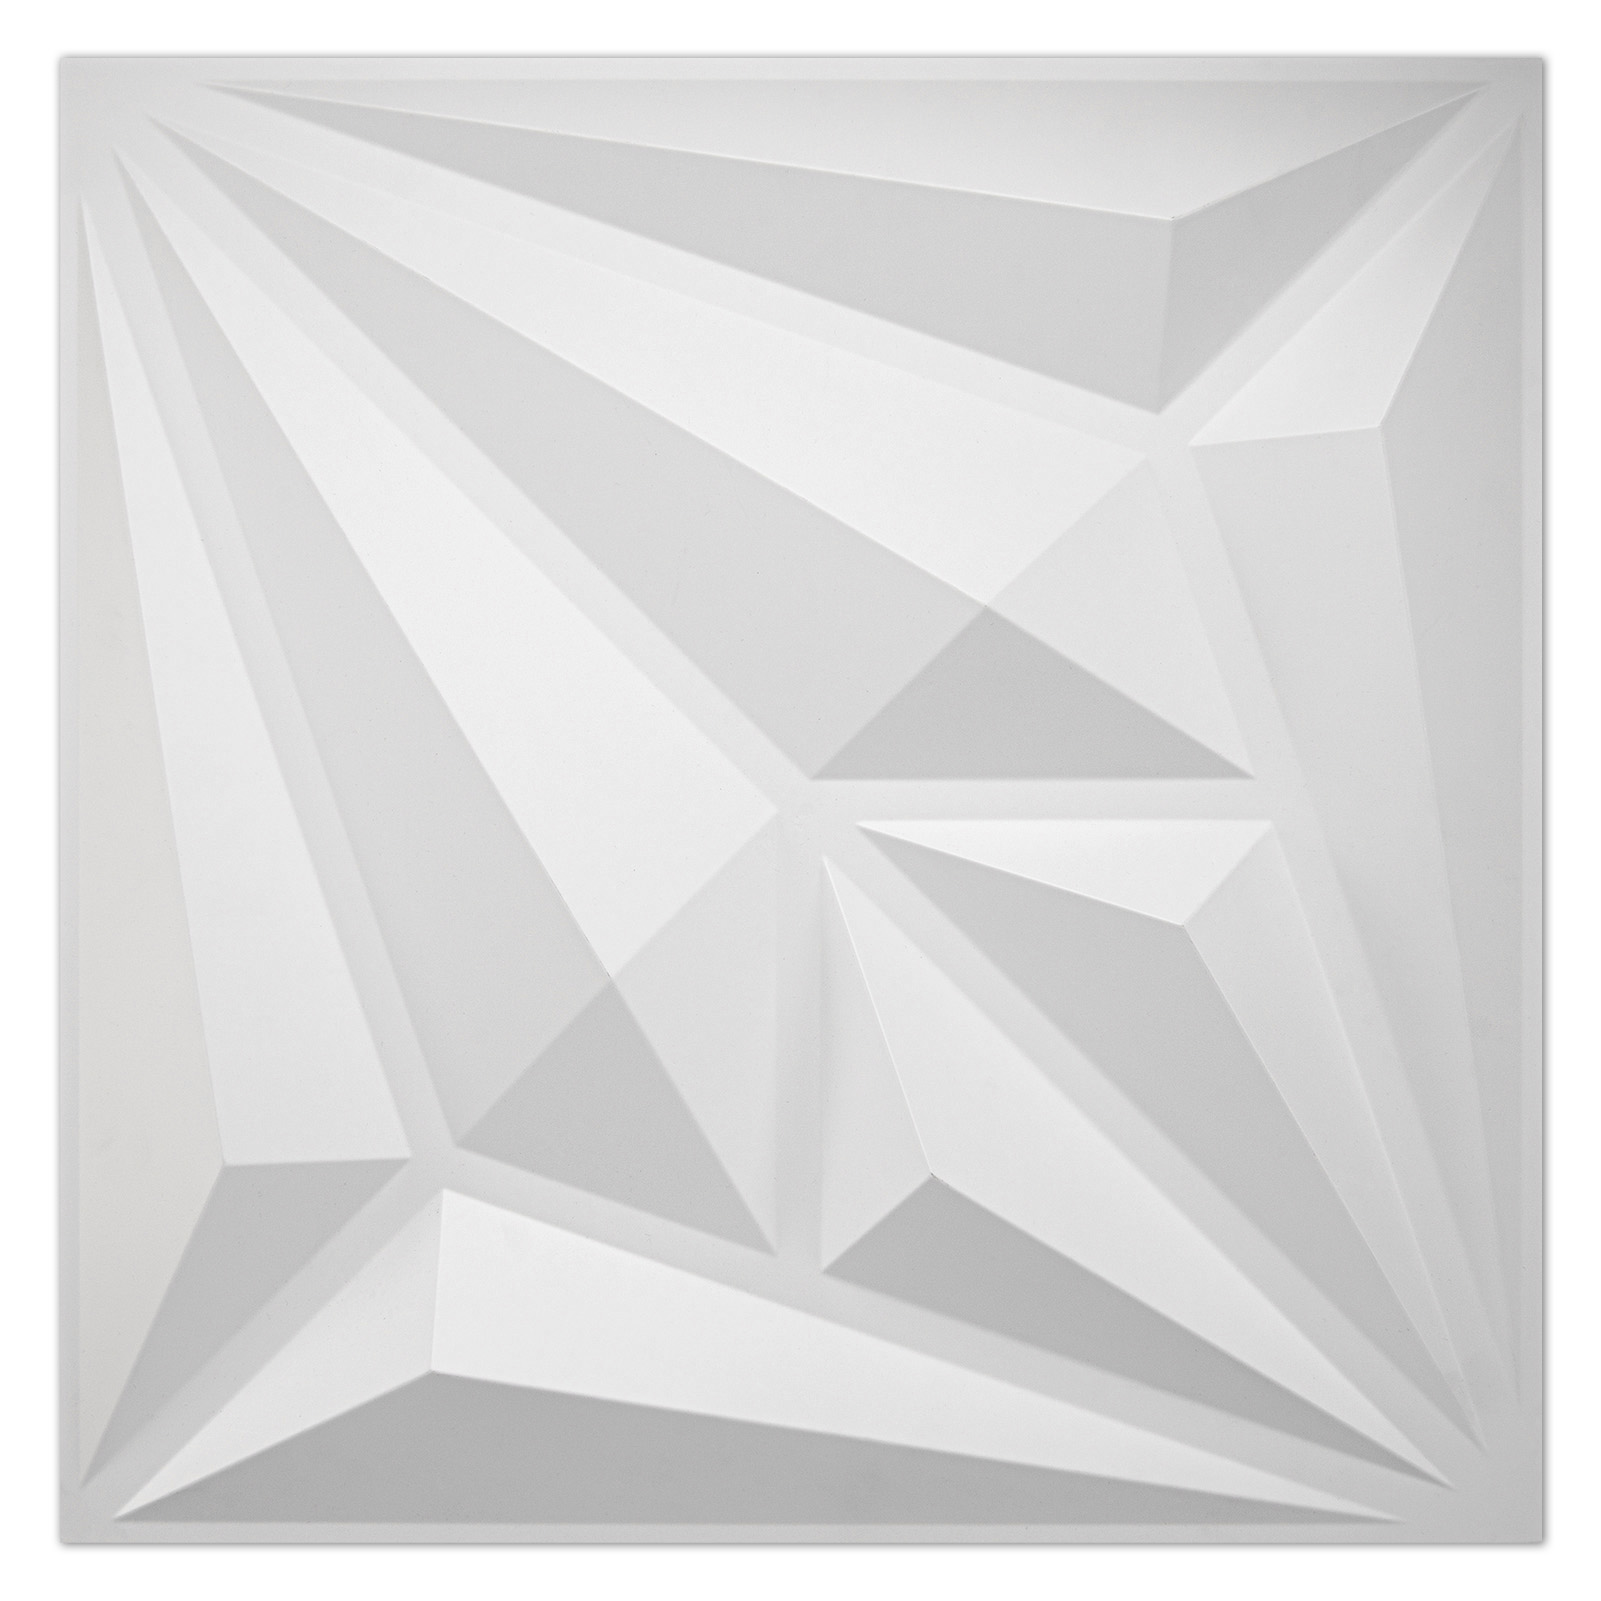 Art3d Decorative 3D Wall Panels in Diamond Design, 12x12 (33 Pack)